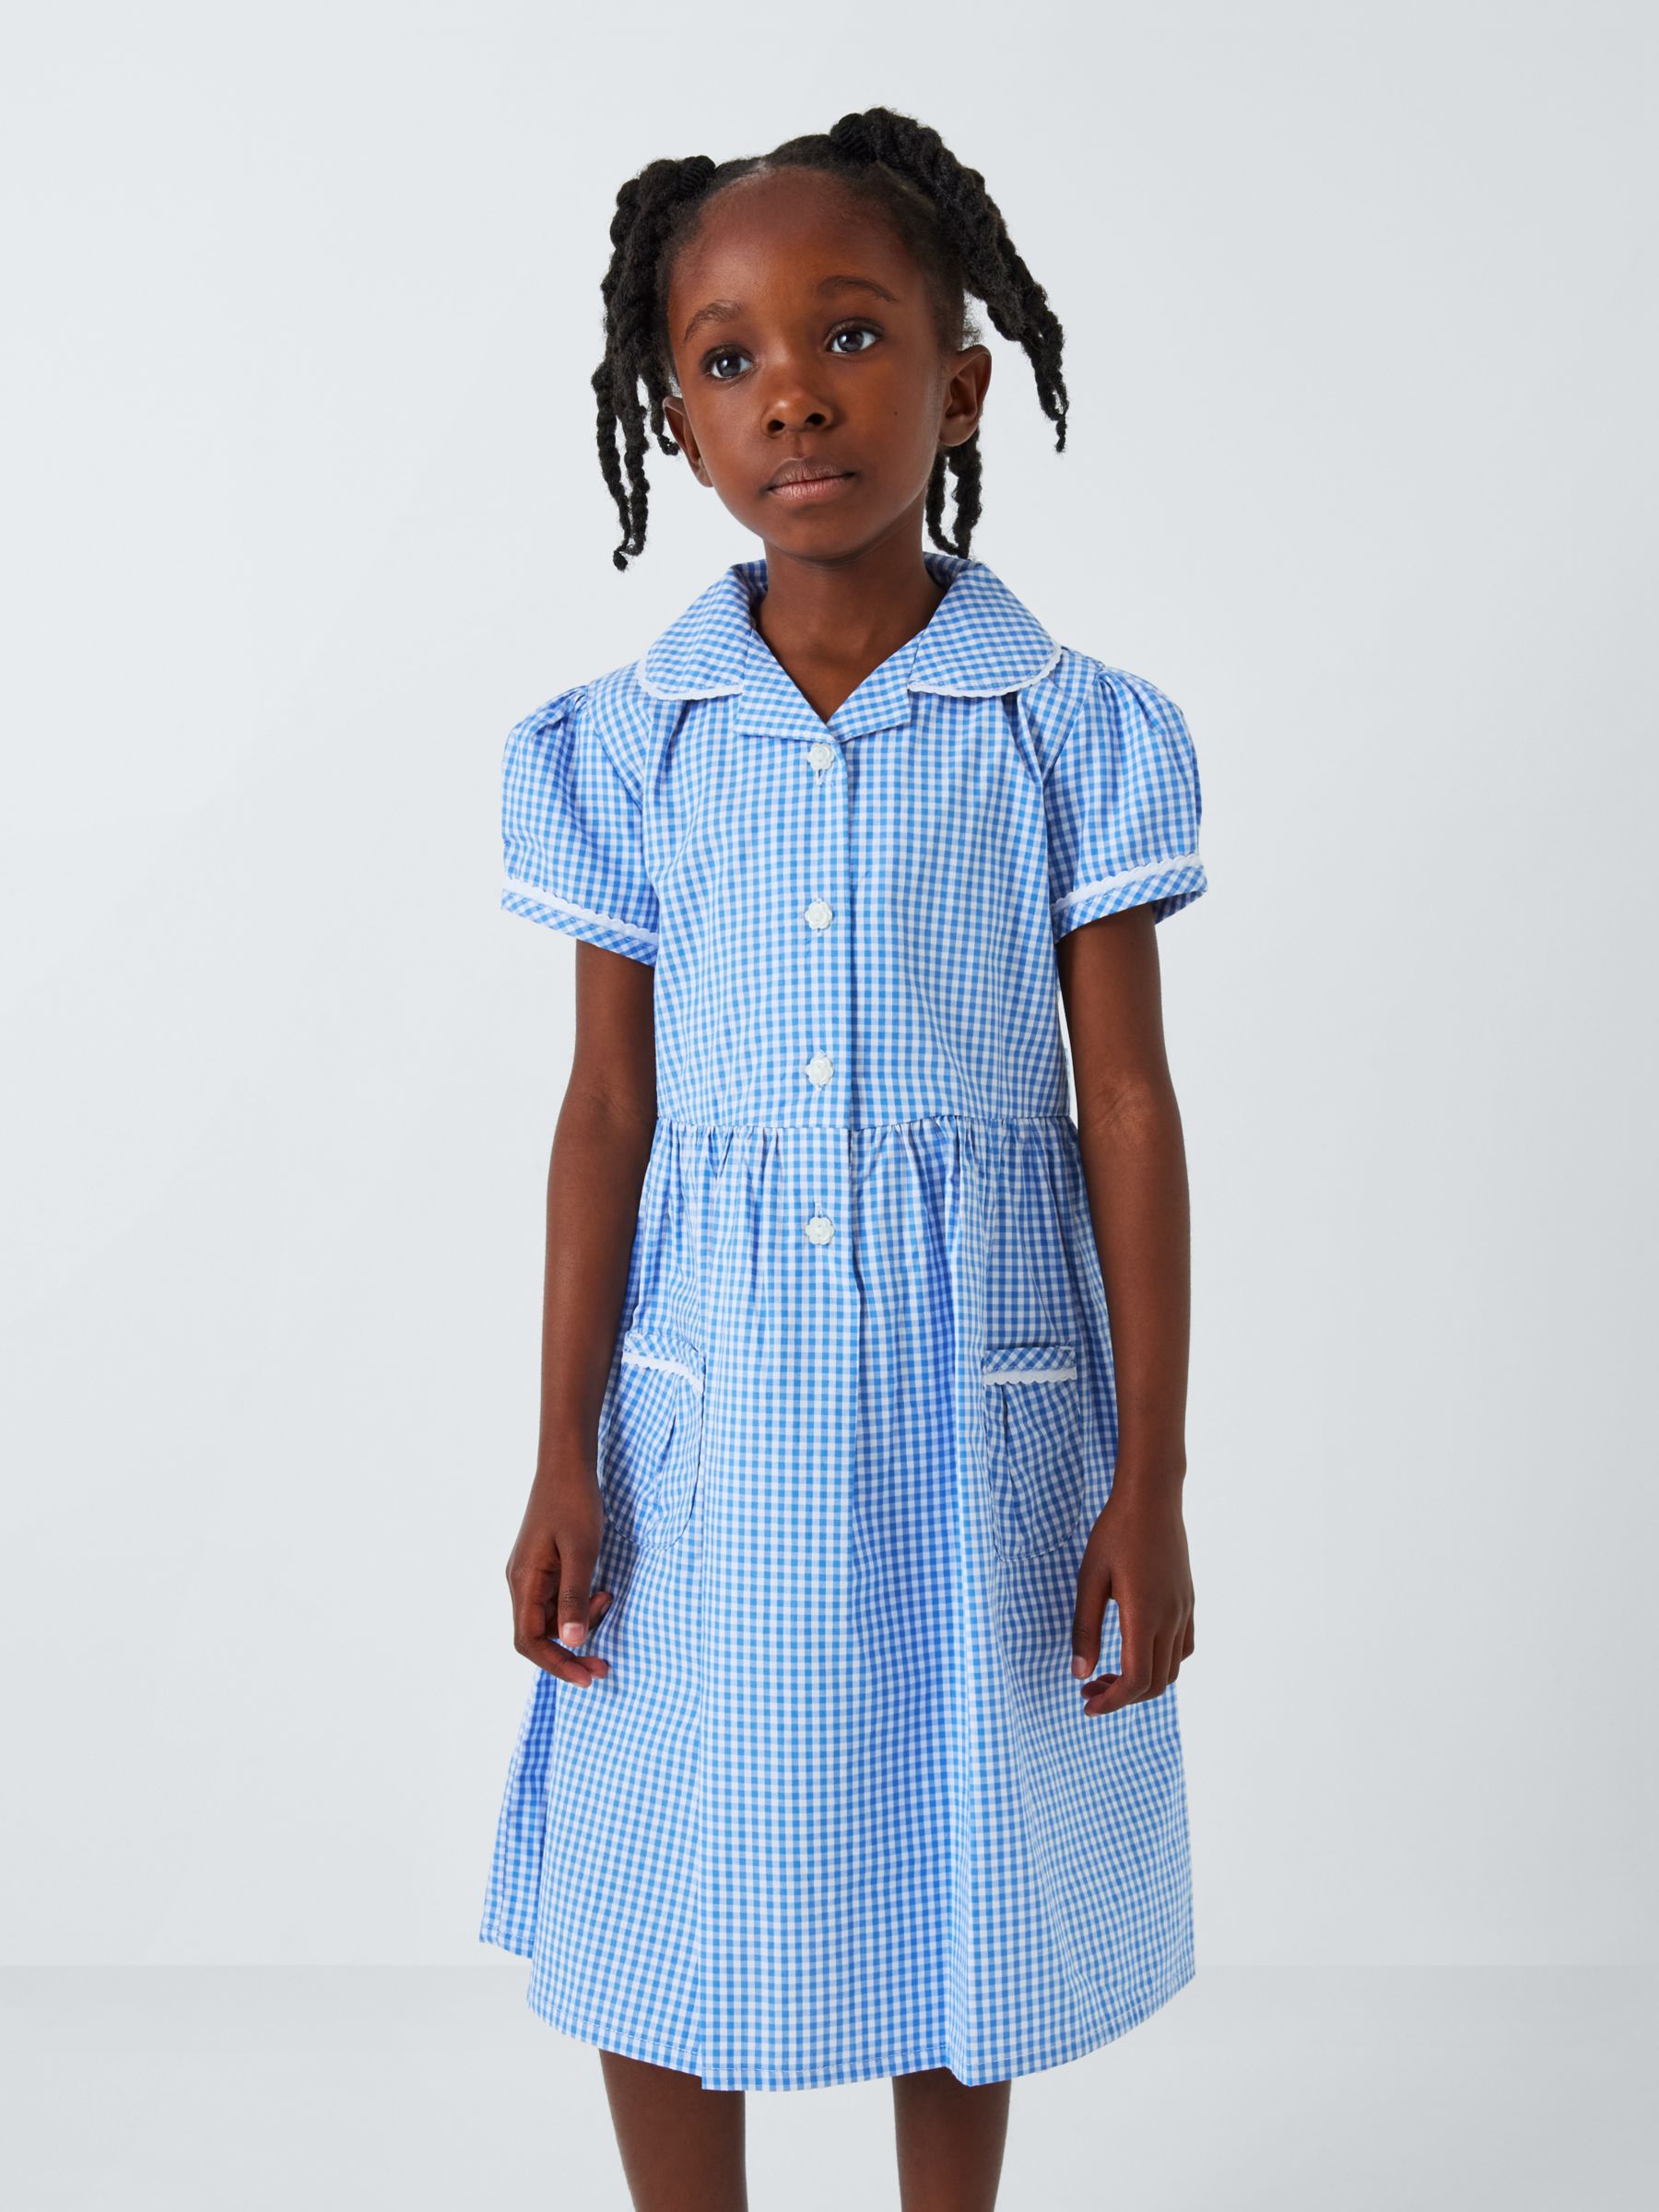 John Lewis Kids' School Gingham Cotton A-Line Dress, Blue/White, 4 years